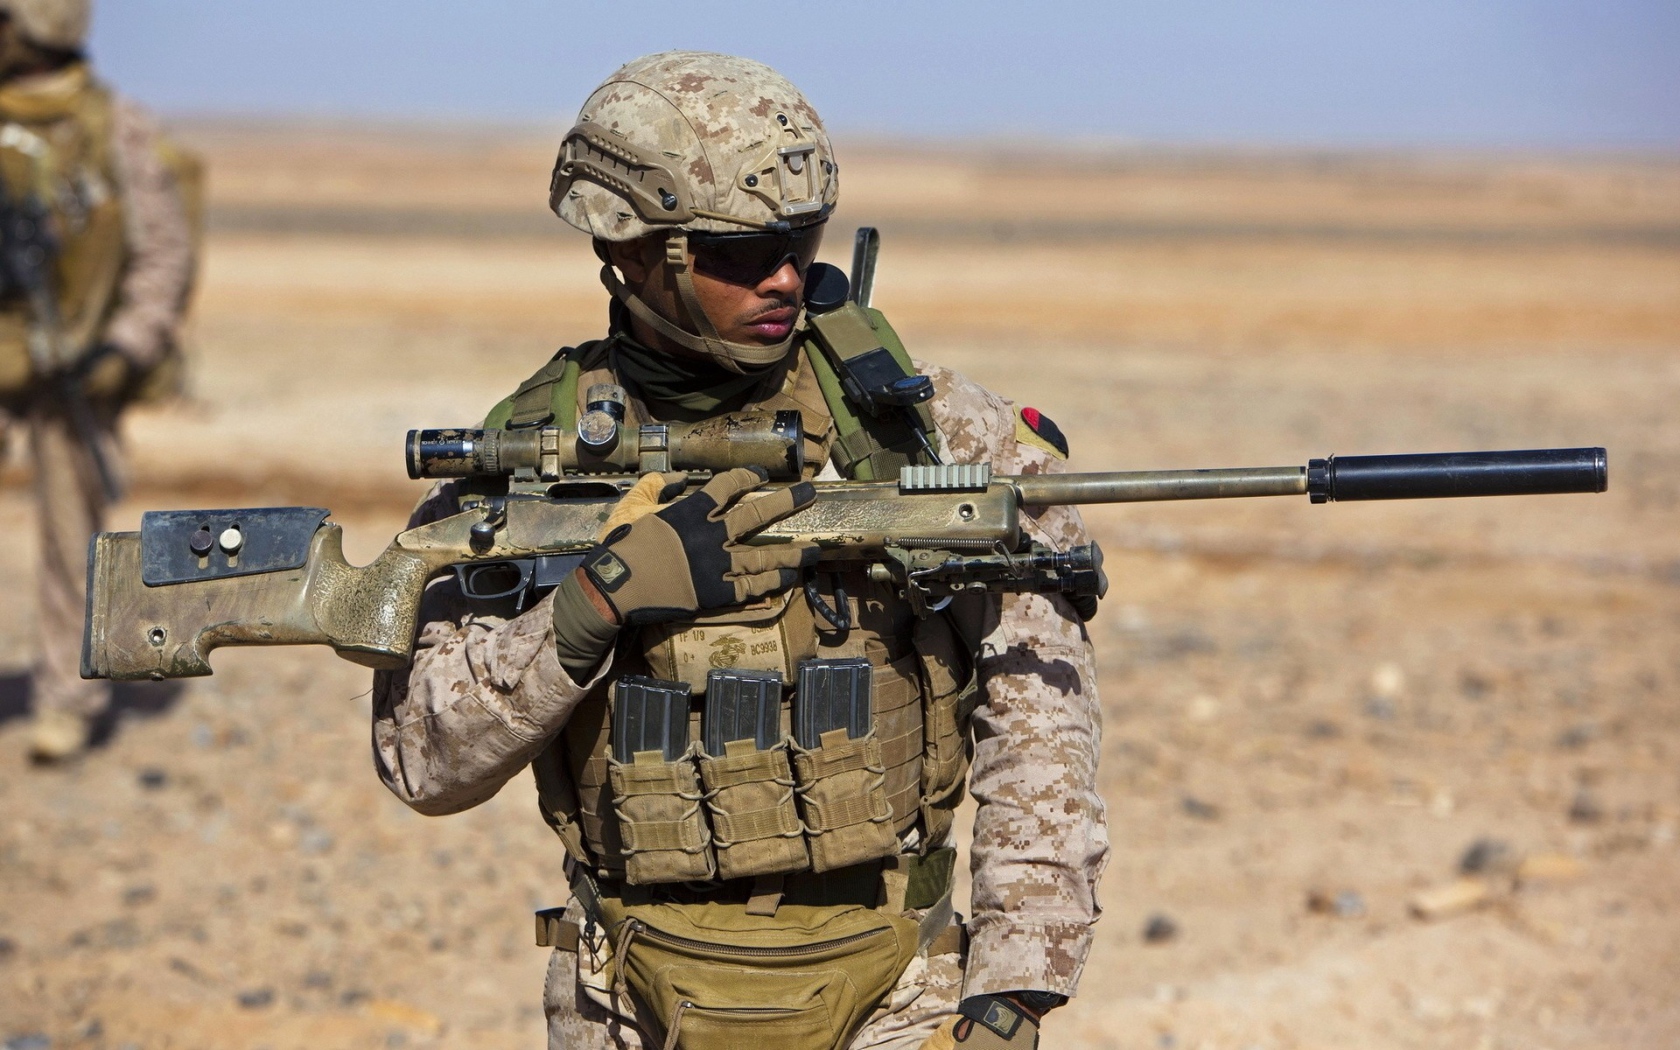 Soldier Sniper in the desert